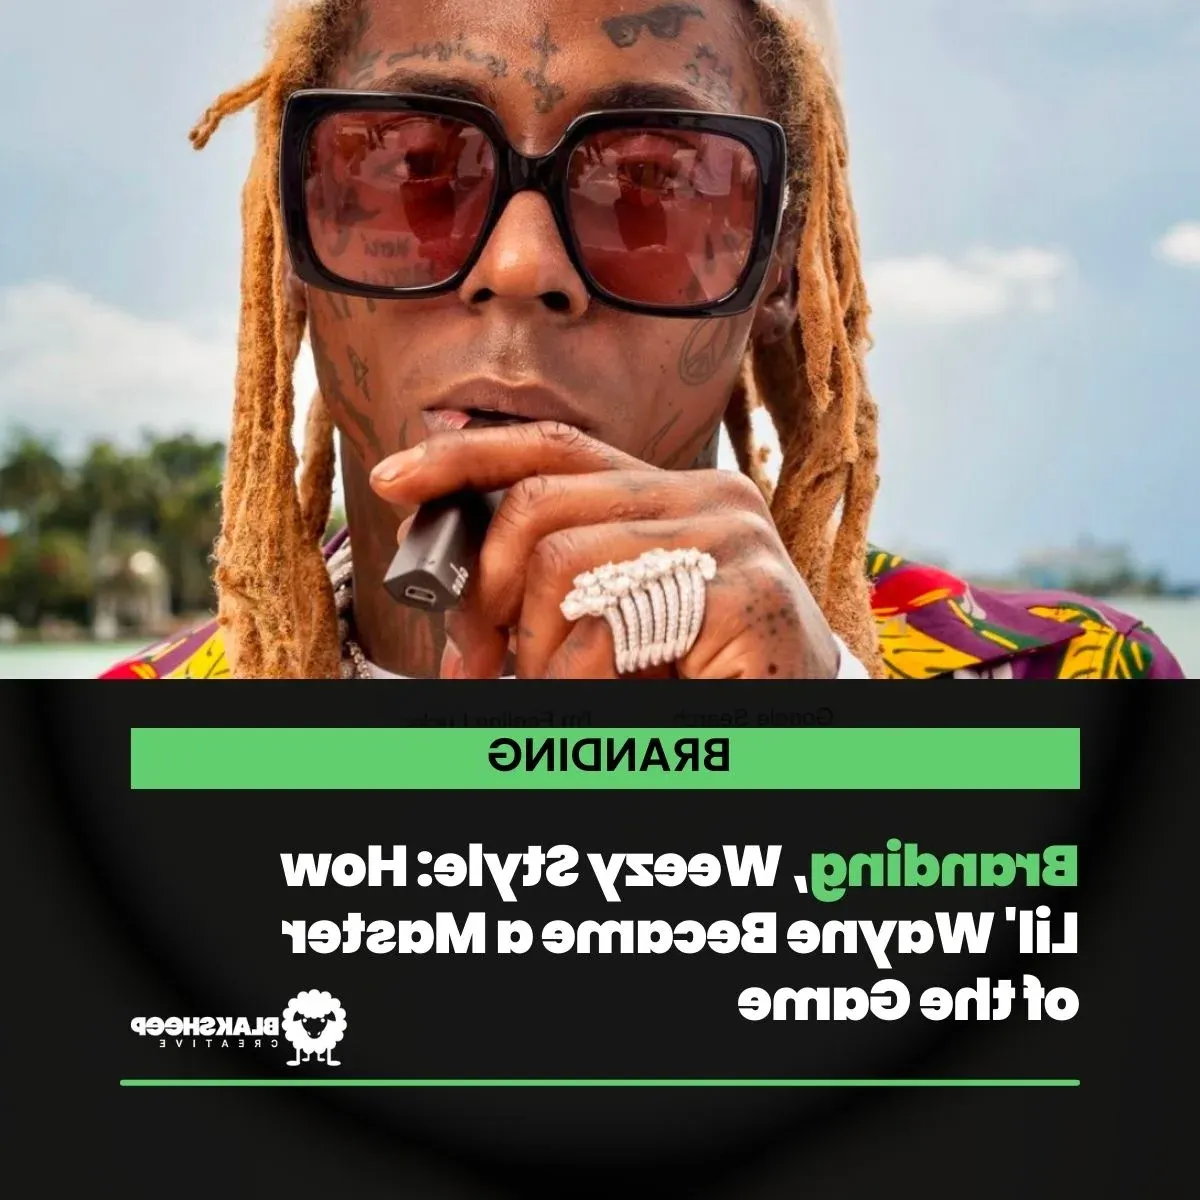 Lil Wayne戴着太阳镜在海边为365app活动做品牌宣传